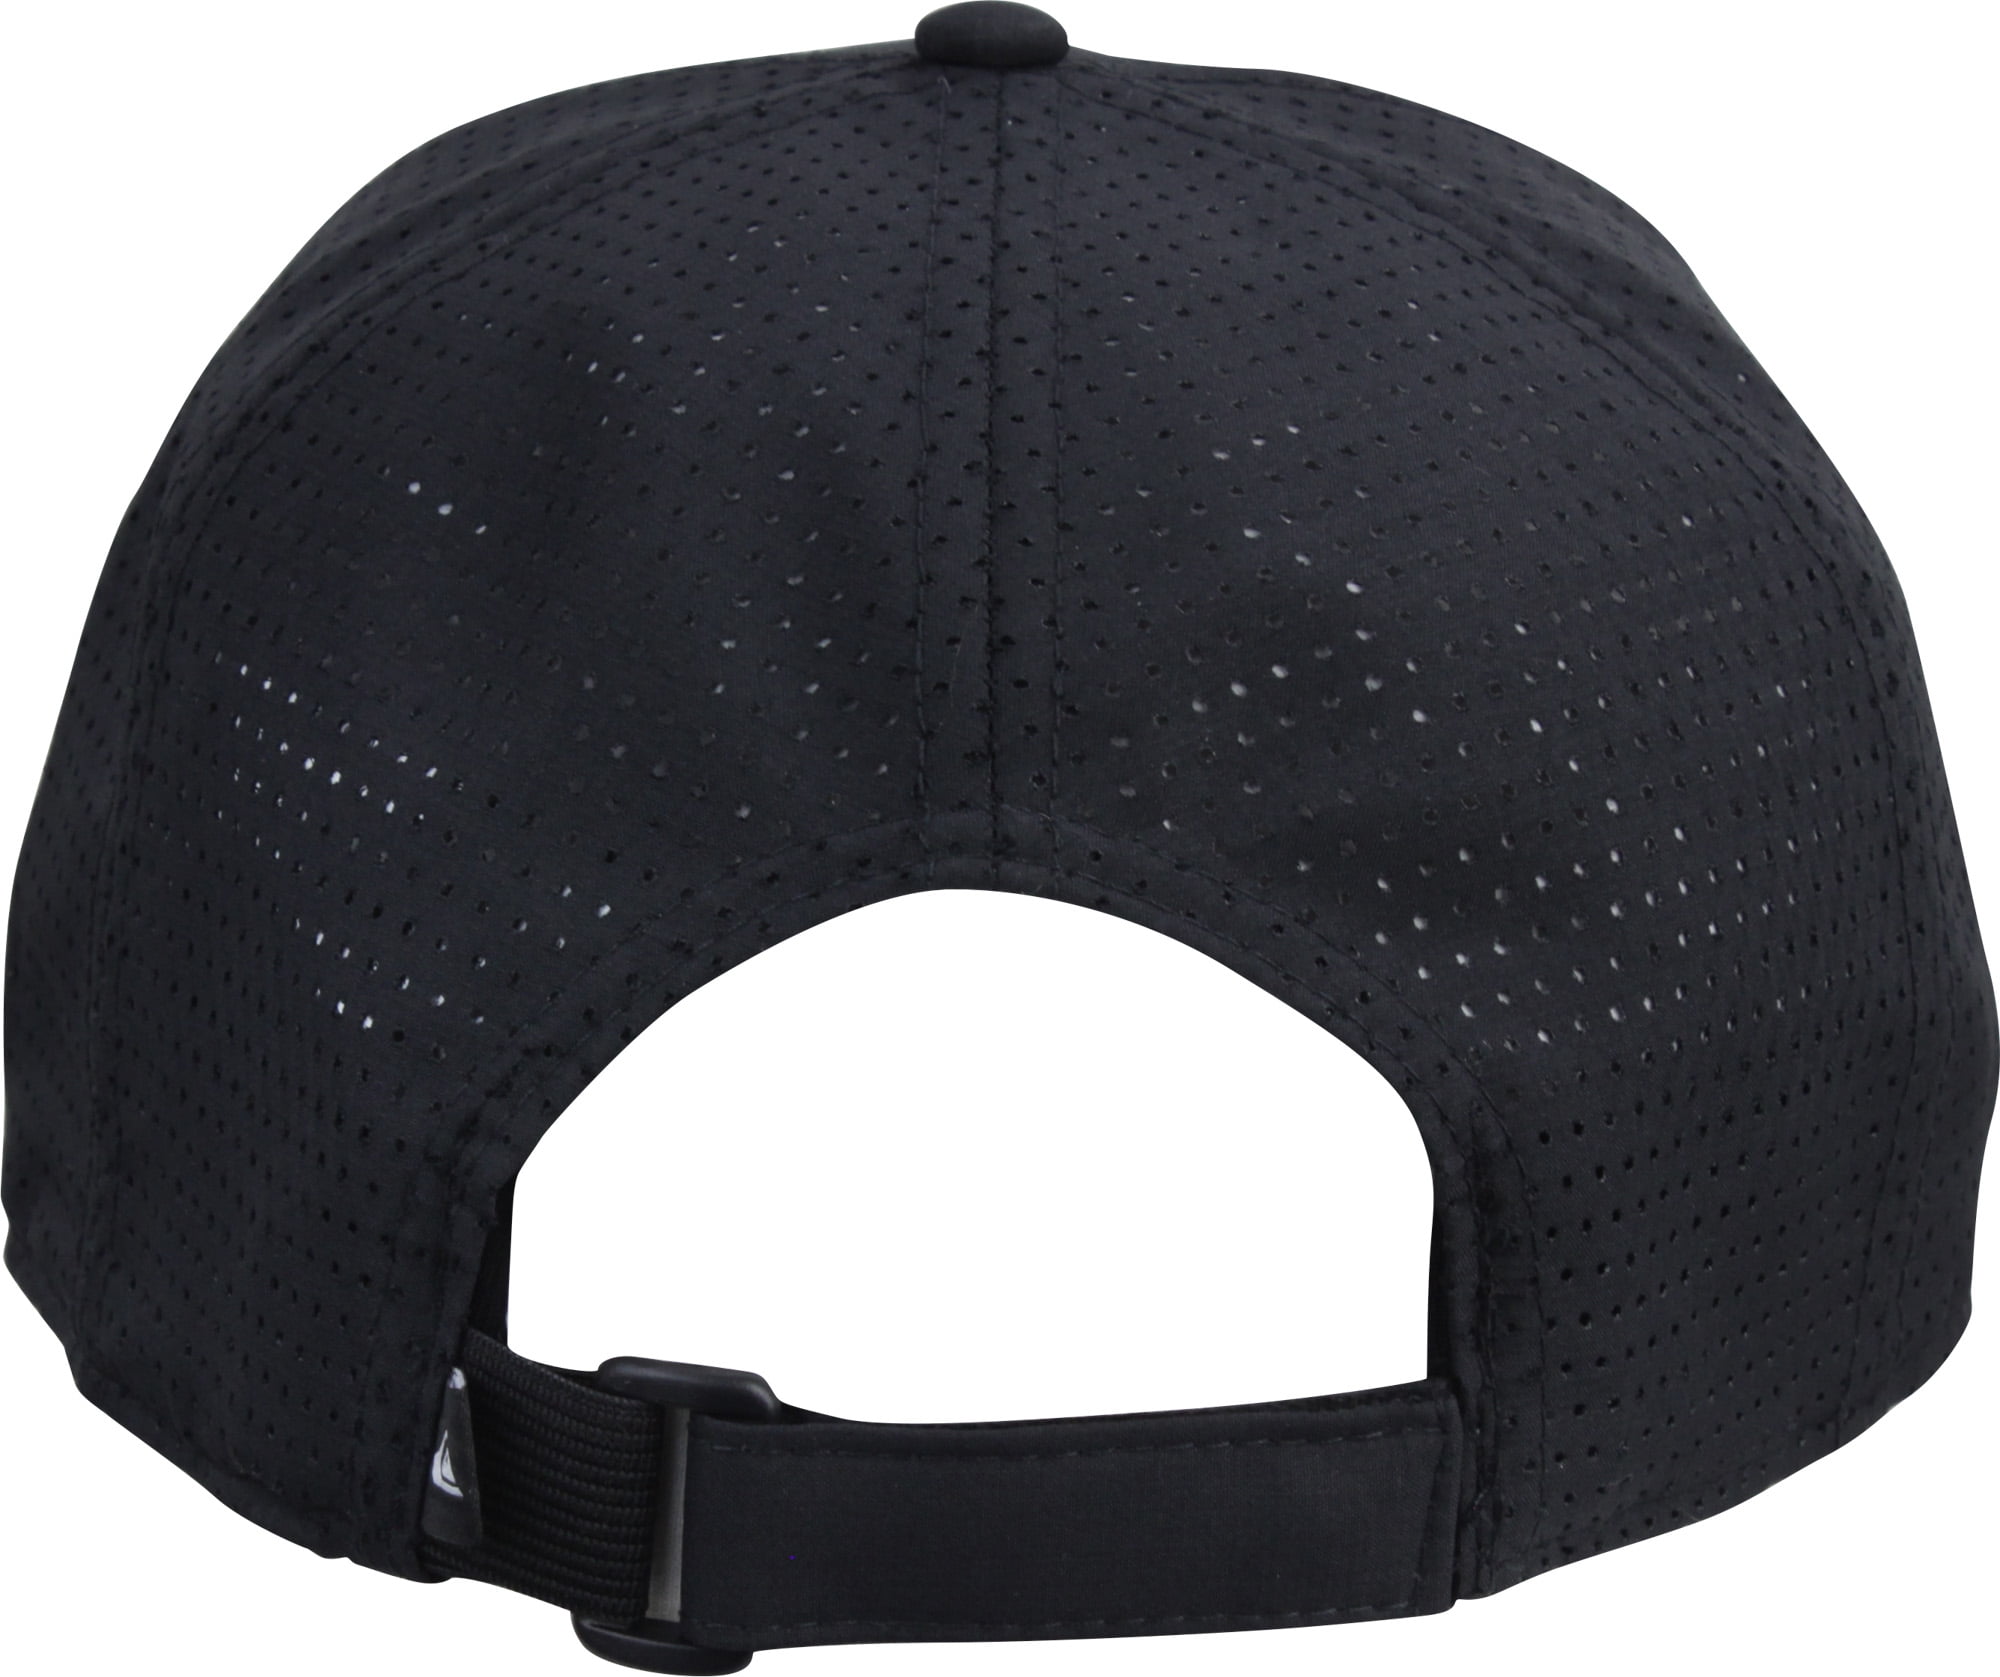 Stashin Tech Strapback - Mens Quiksilver Adjustable Hat Black